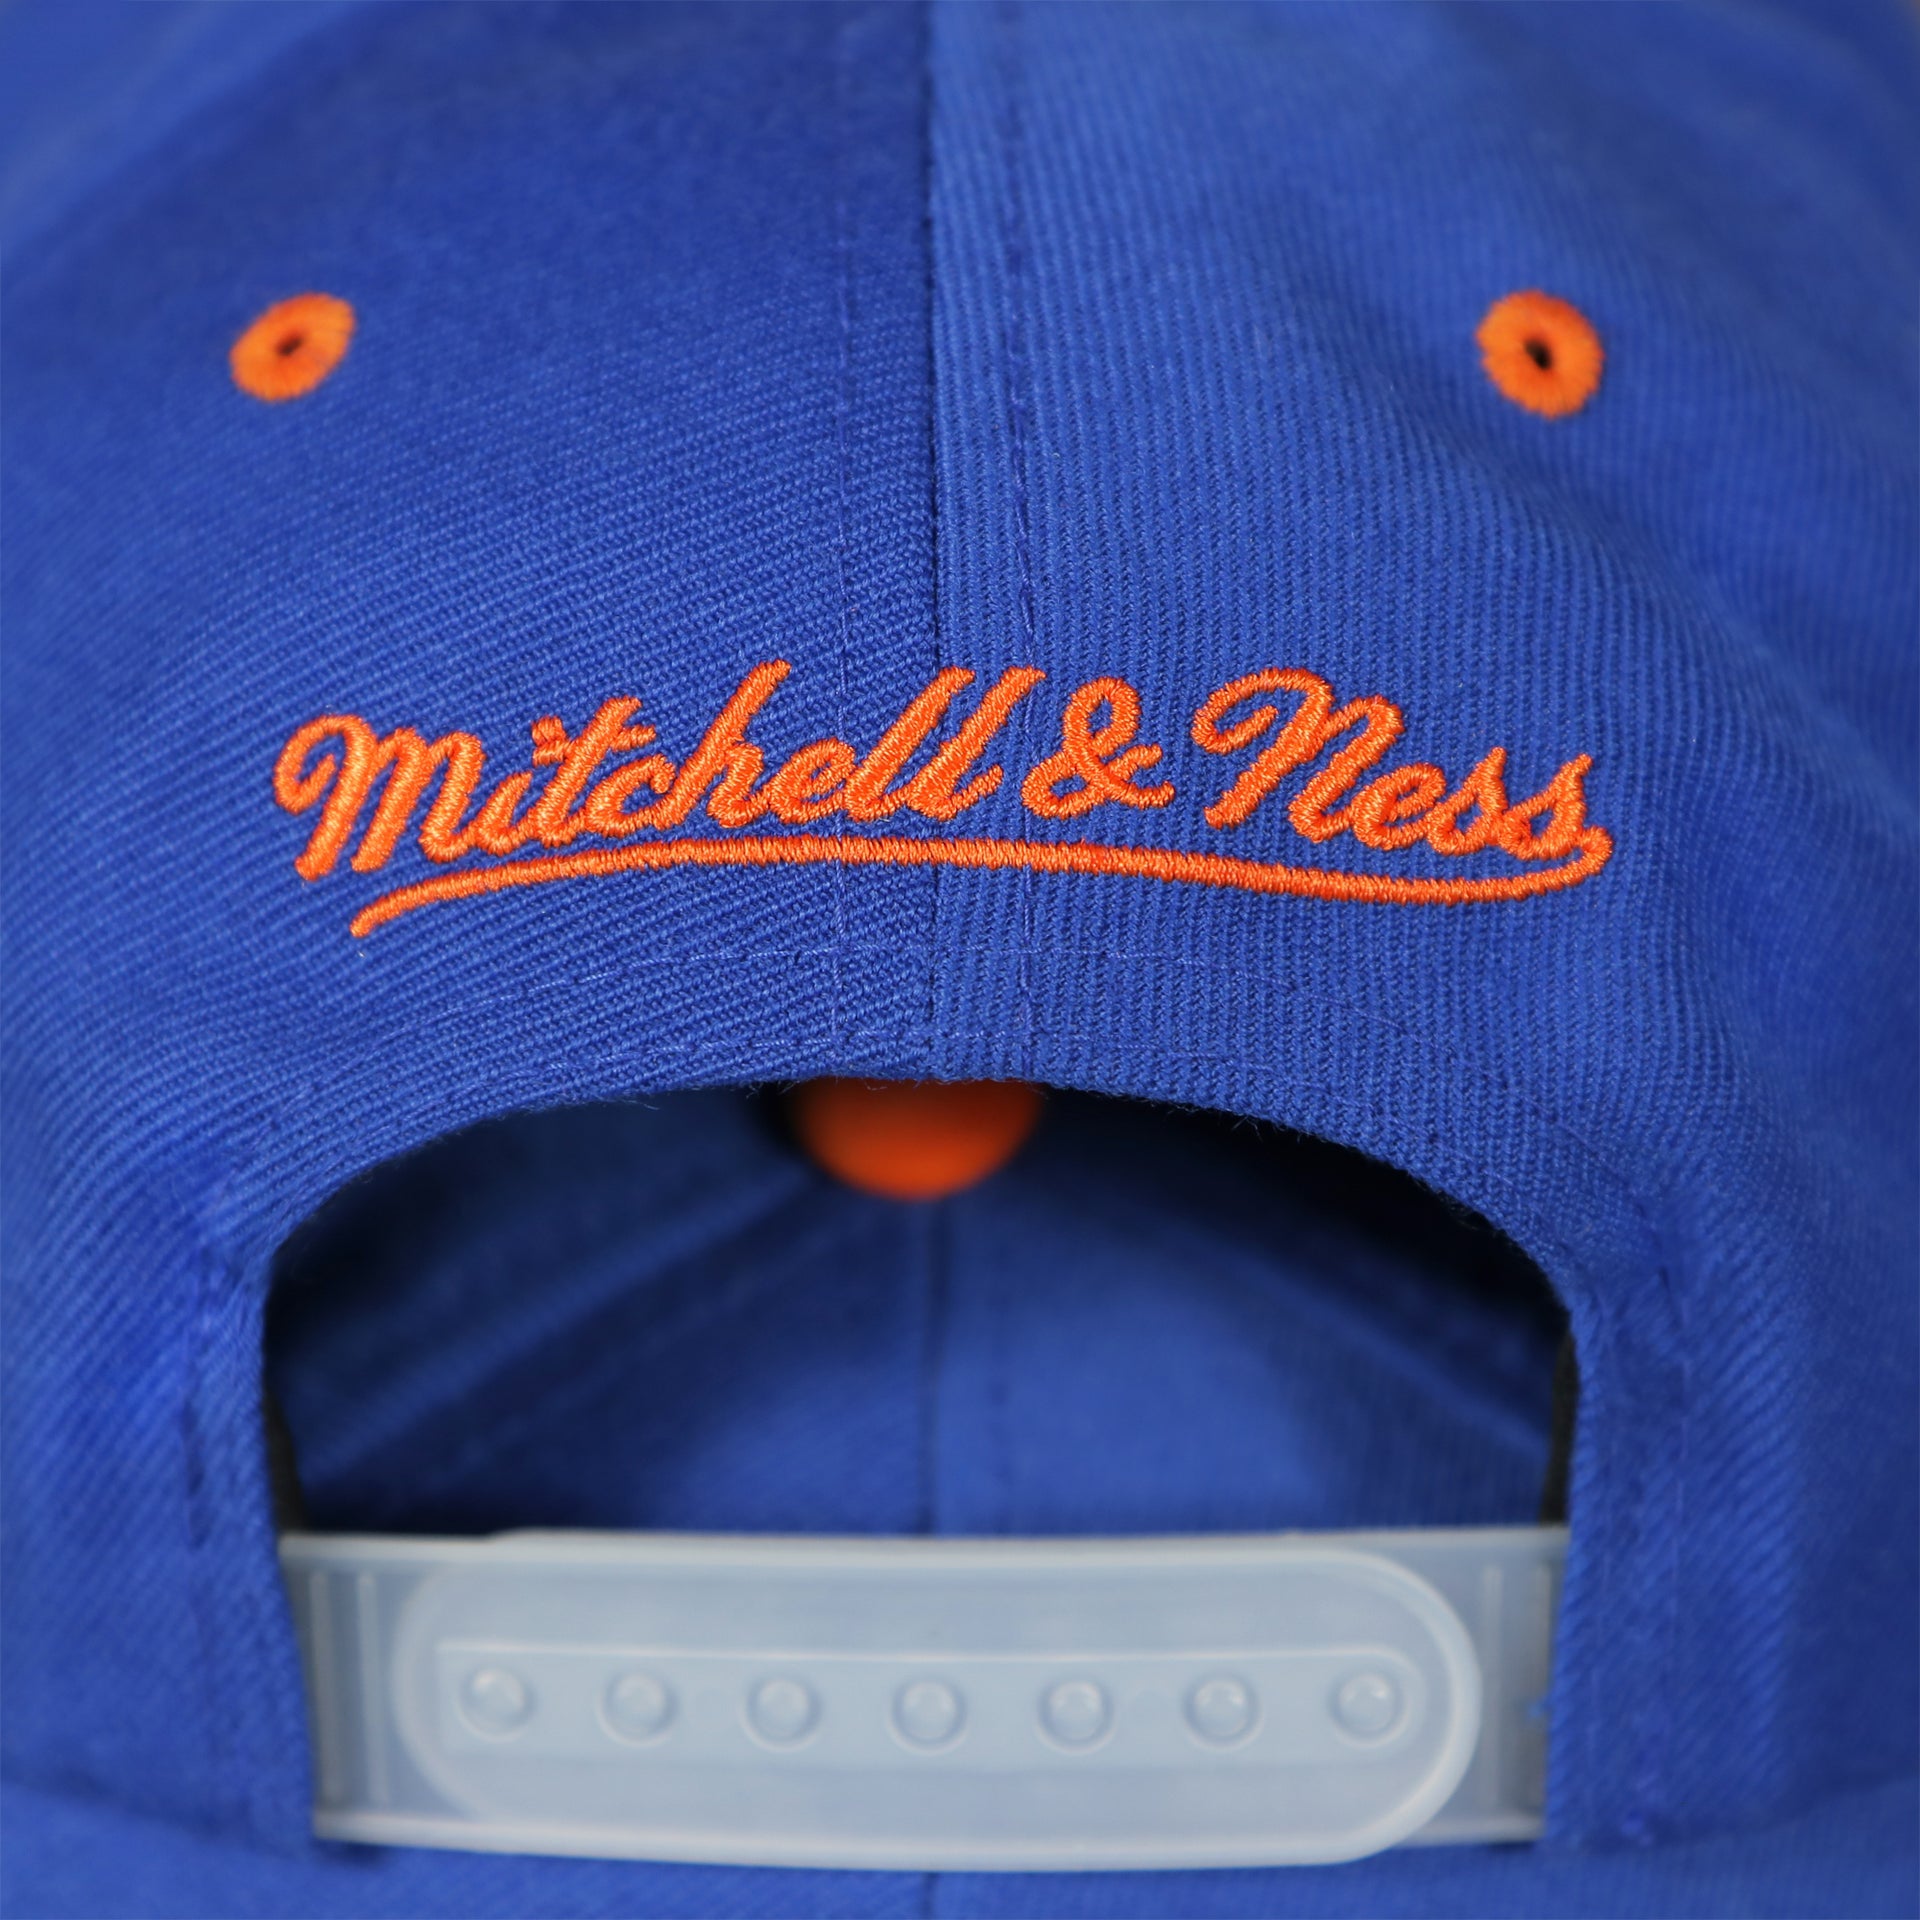 mitchell and ness logo on the Knicks Gray Bottom Snapback | New York Knicks Retro Grey Bottom Snap Cap